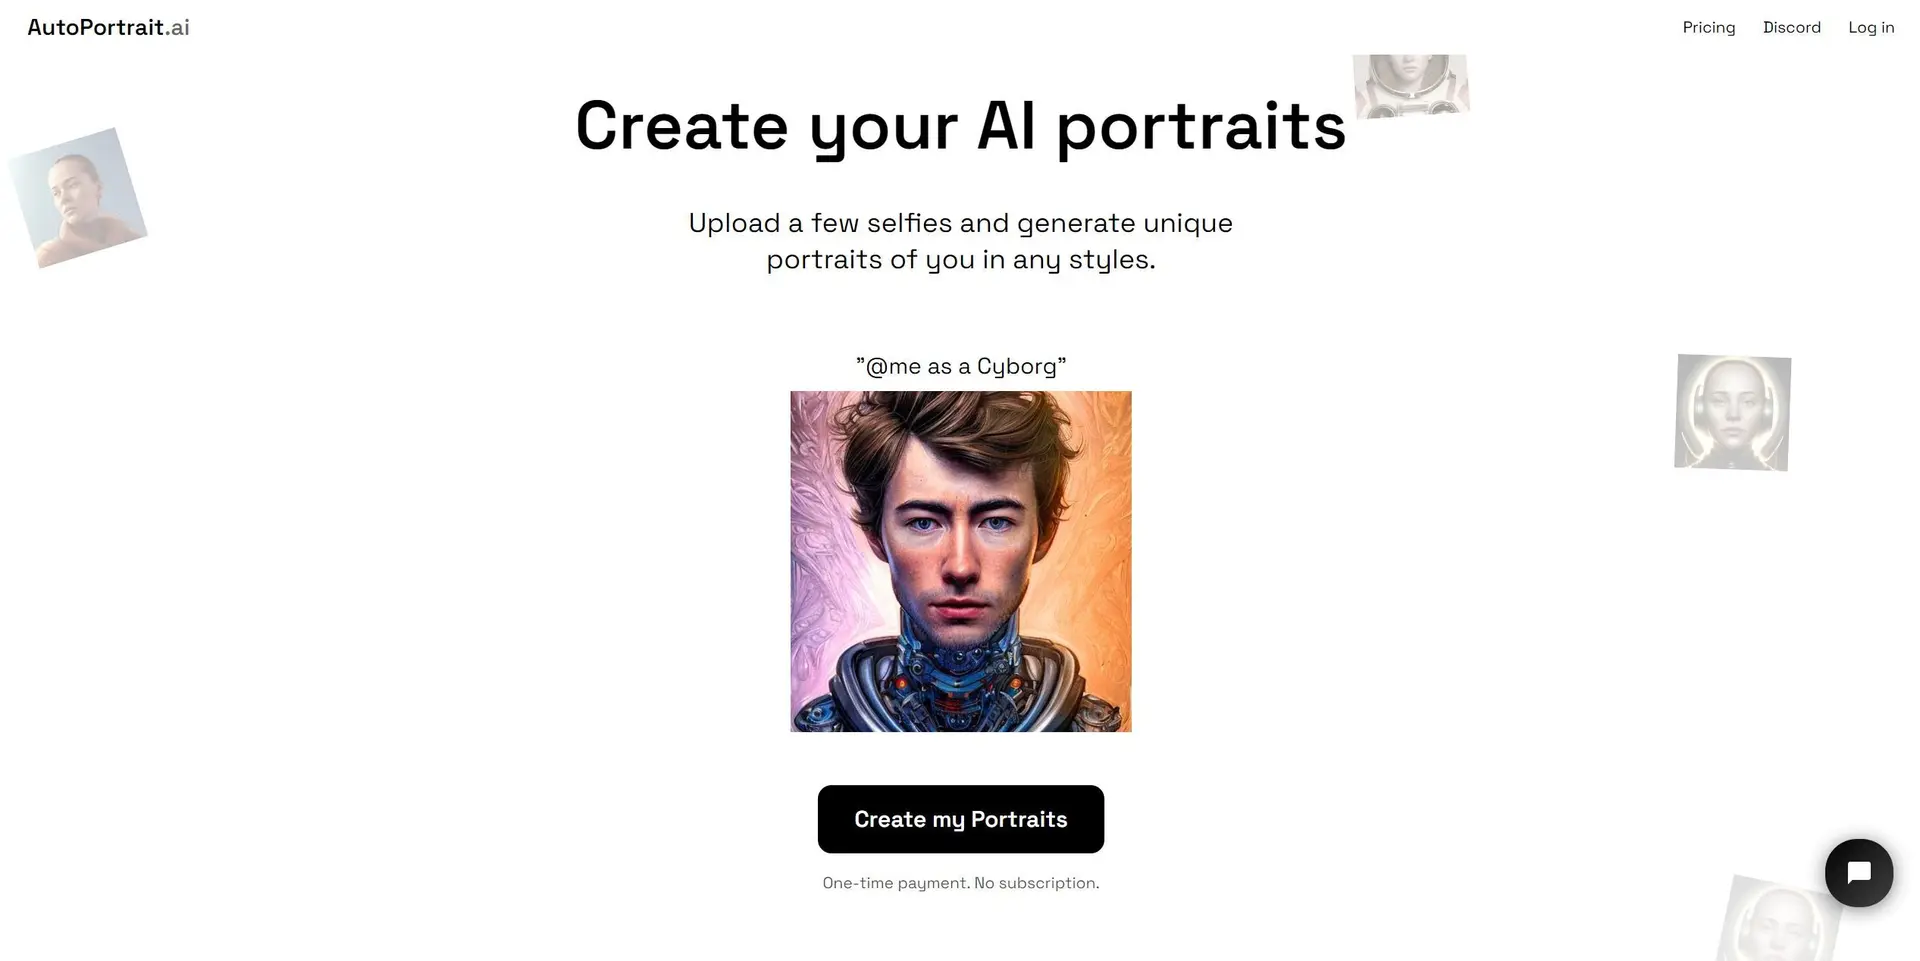 Auto Portraitwebsite picture